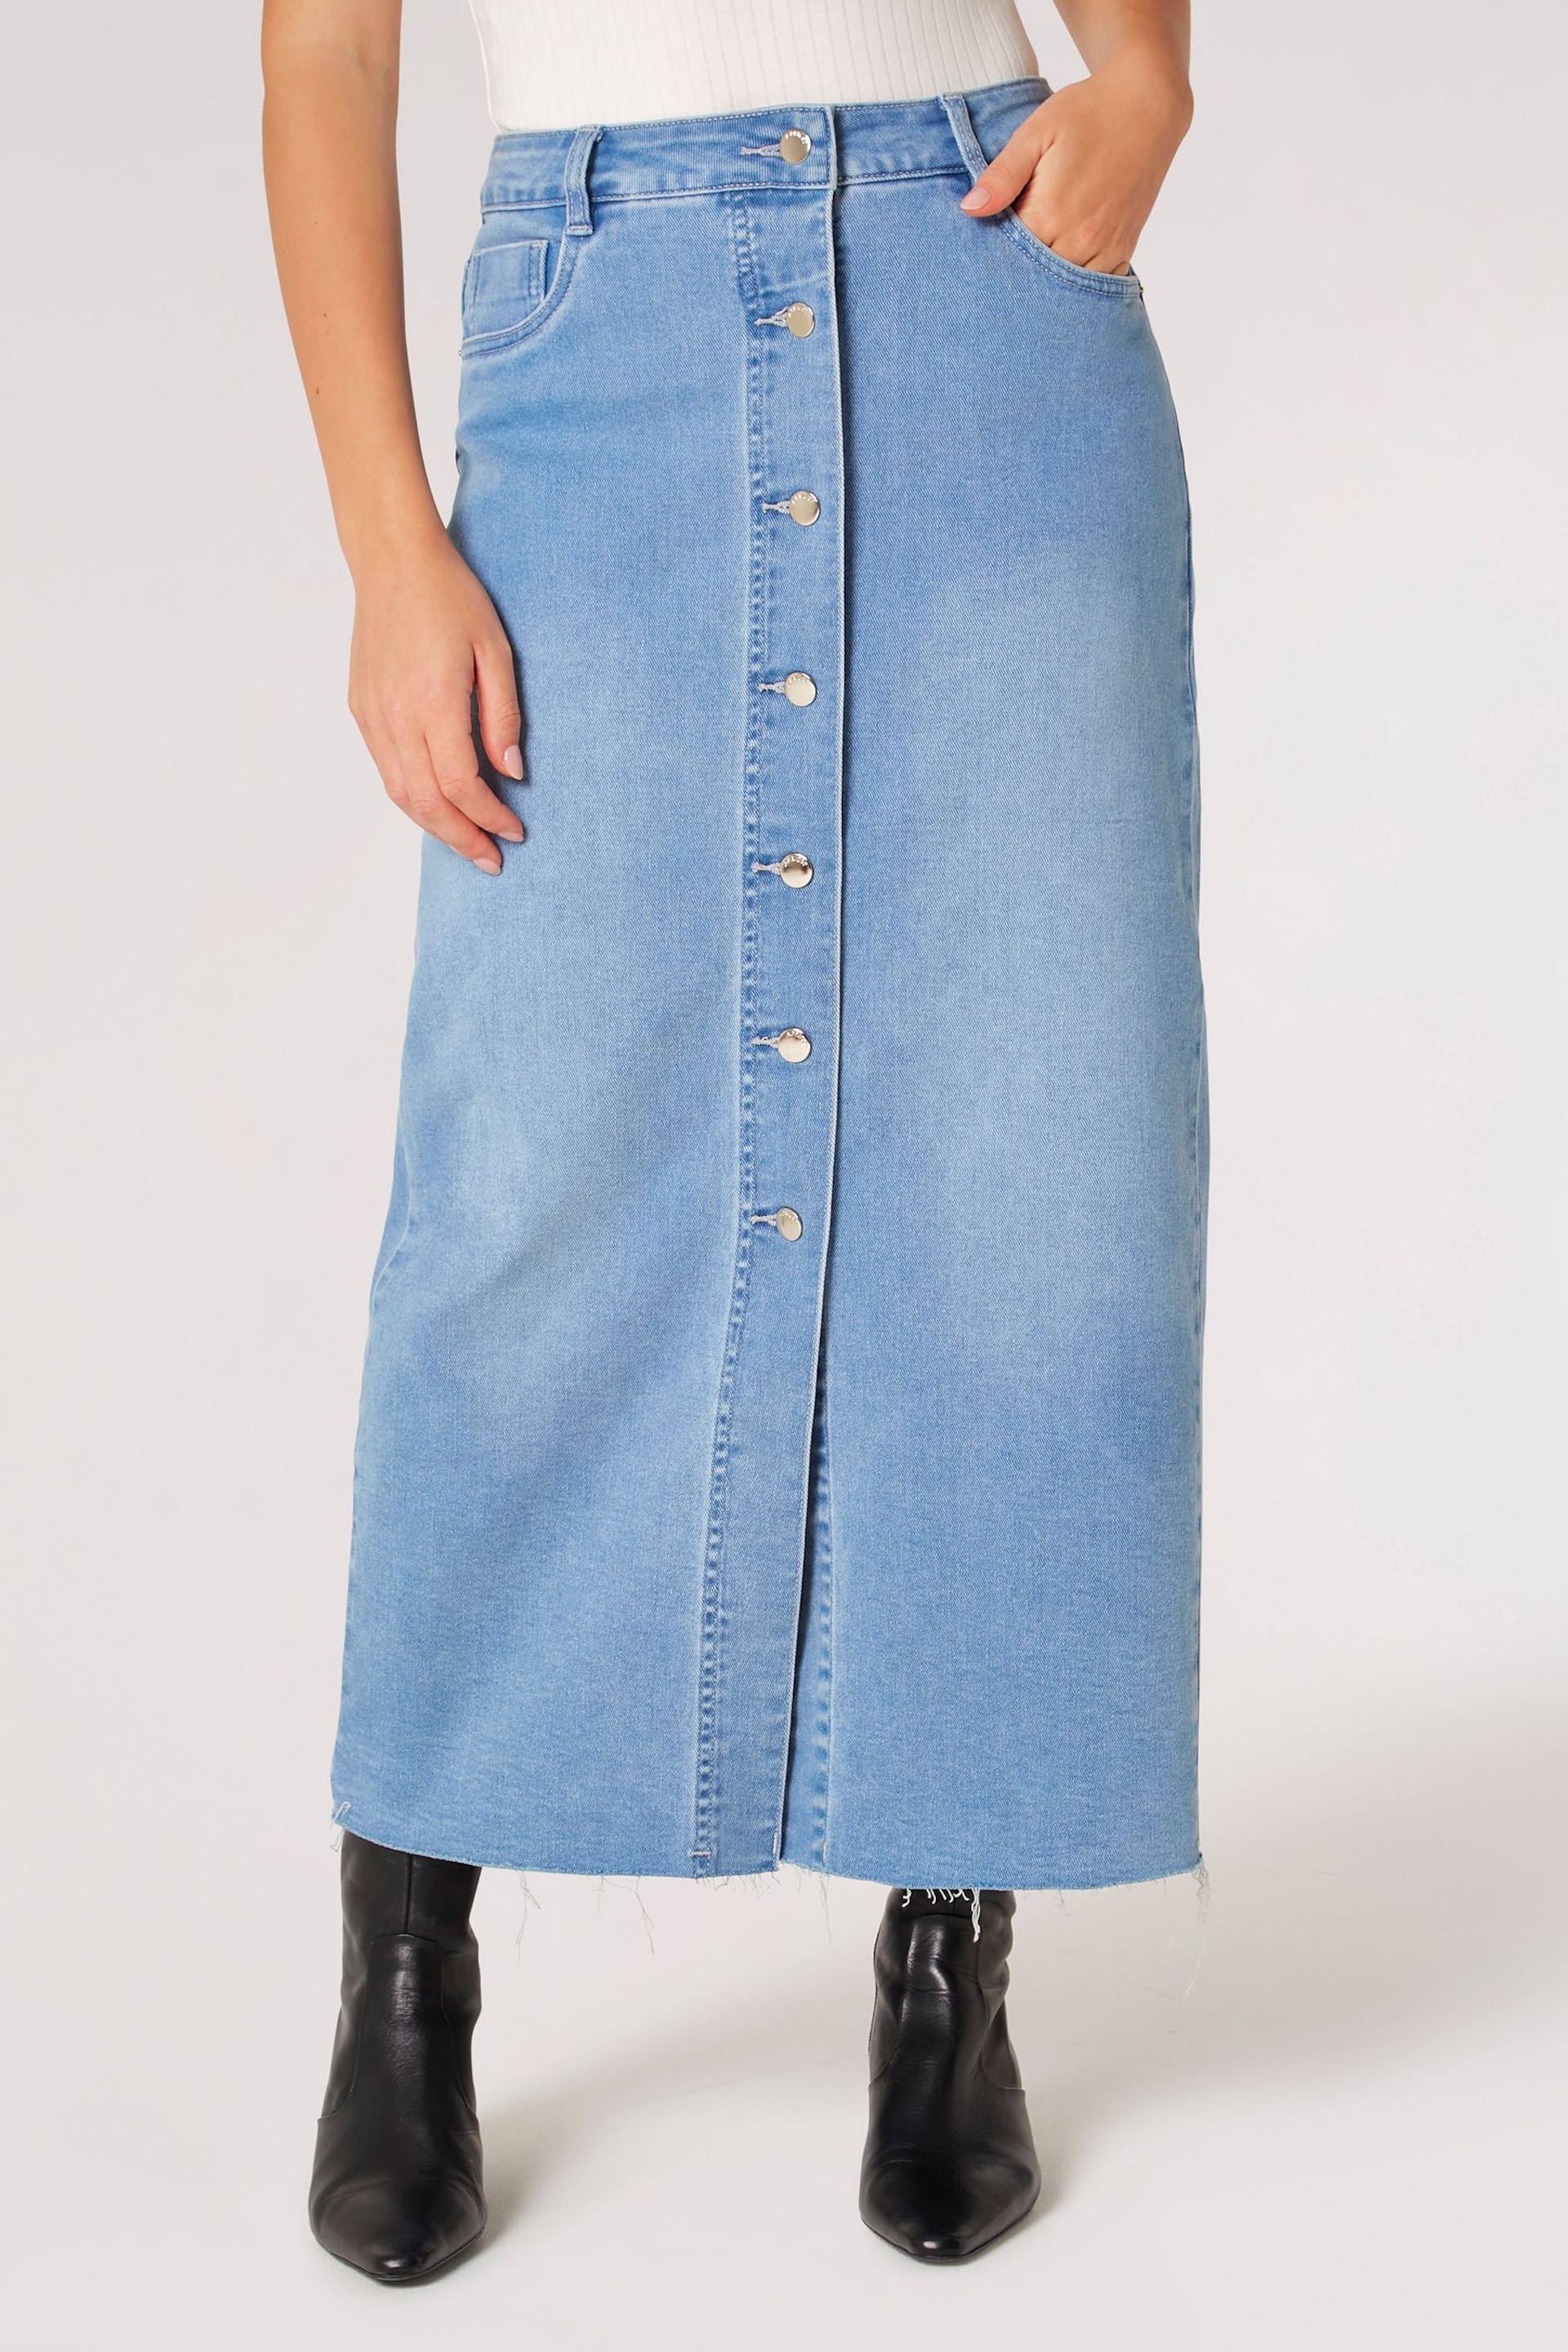 Apricot Blue Button Down Denim Midi Skirt - Image 3 of 5